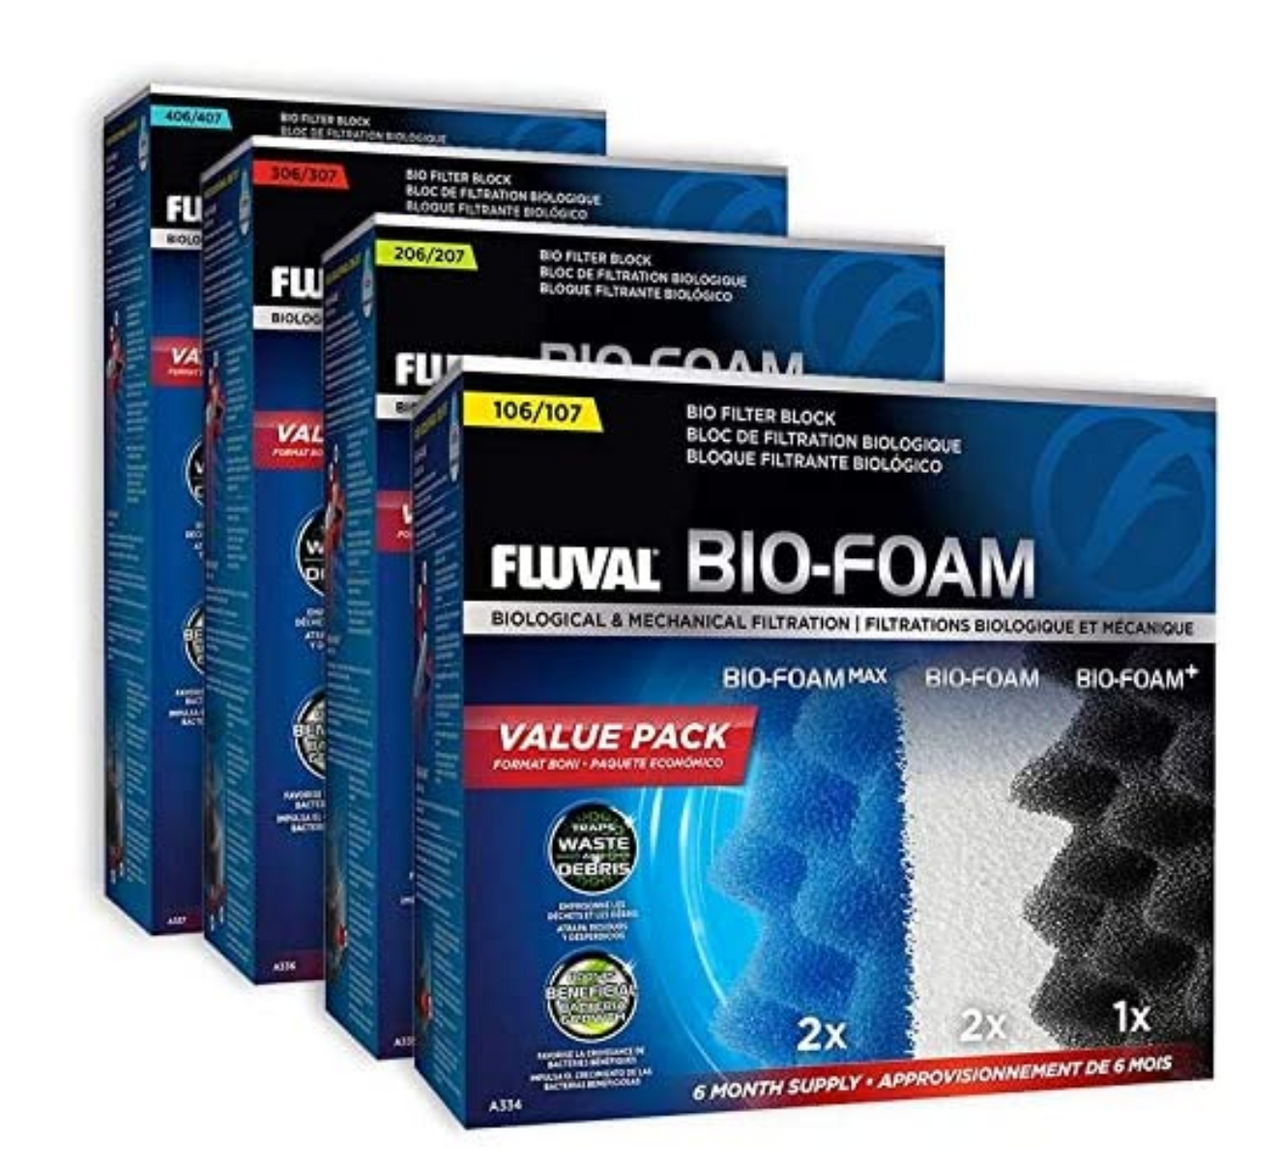 Fluval 306/307 6 Month Bio Foam Value Pack - A336